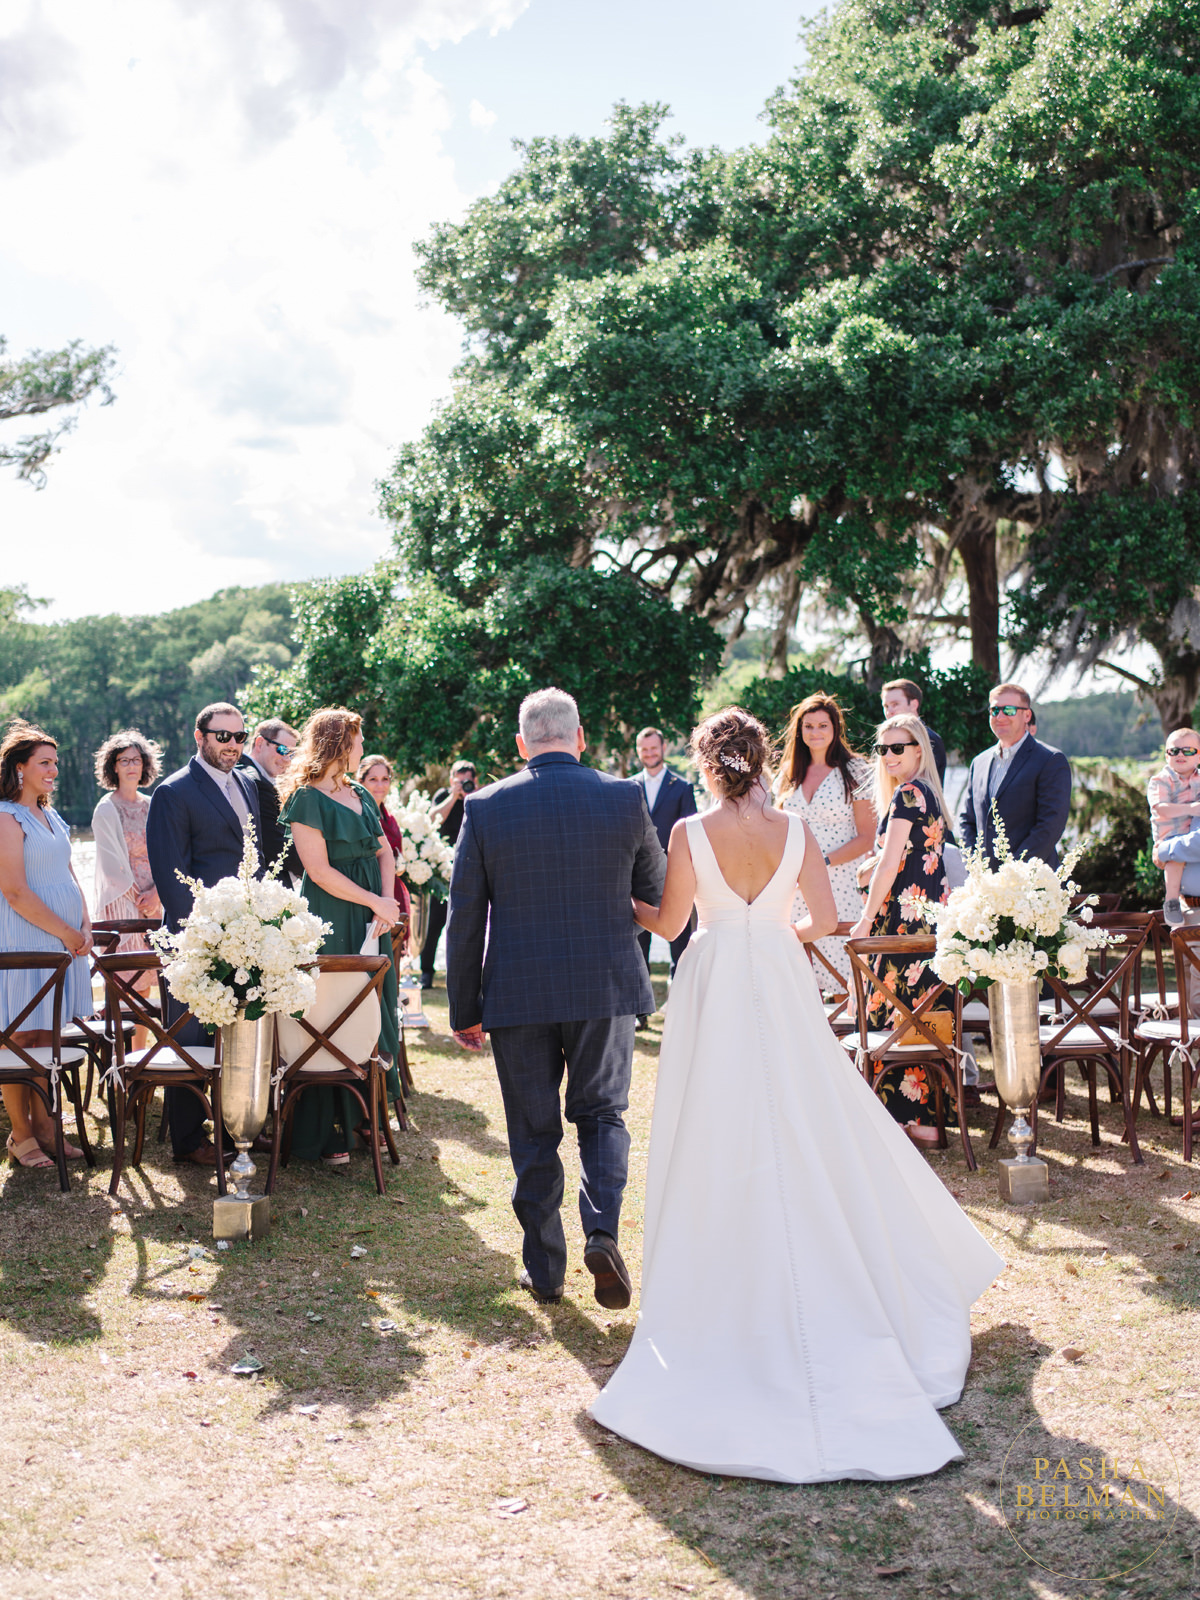 Wachesaw Plantation Club Weddings Myrtle Beach / Grand Strand Wedding Photography and Wedding Photo Ideas by Pasha Belman